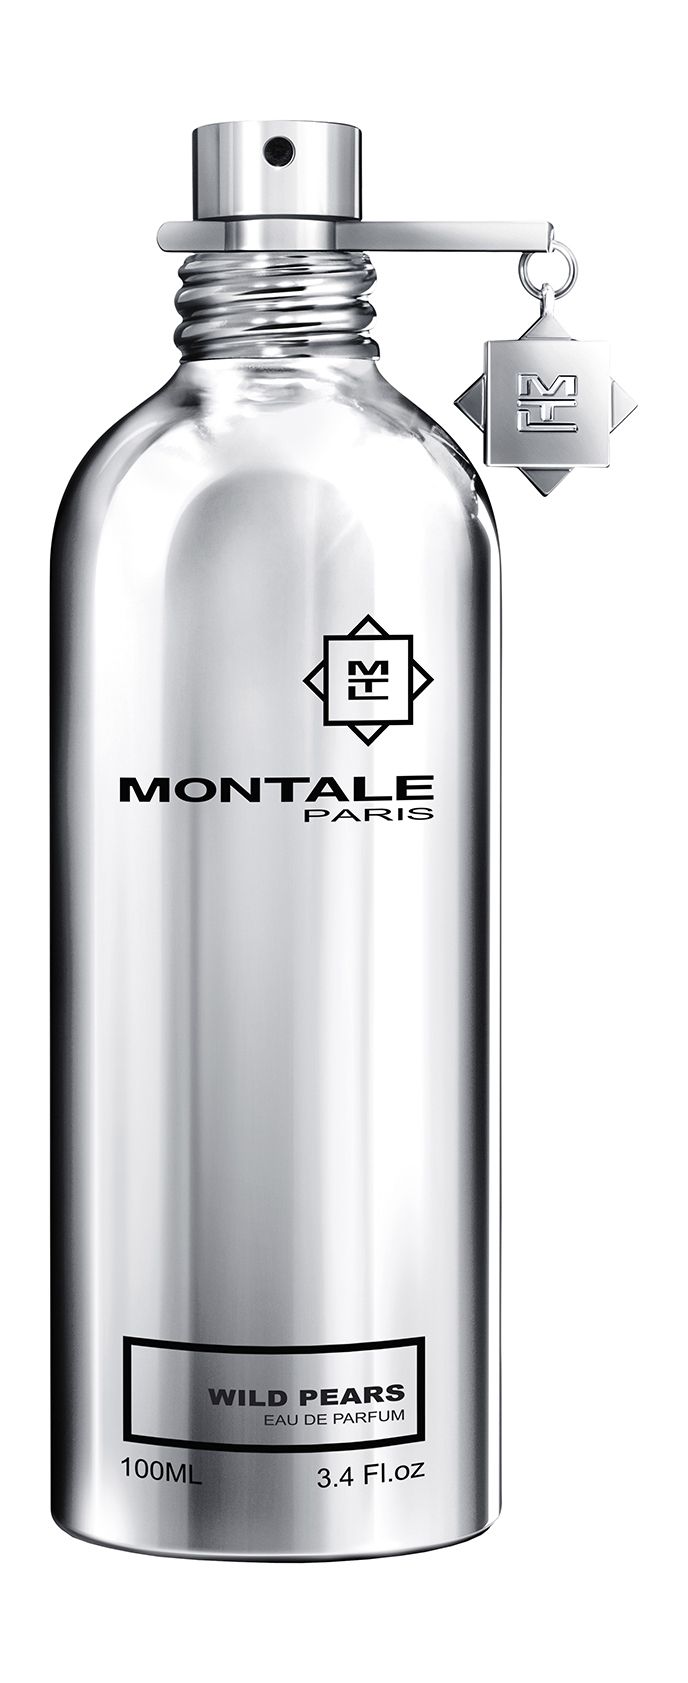 Montale basilic. Montale fantastic basilic. Montale fantastic basilic 20 ml. Montale Wild Pears. Montale парфюмерная вода fantastic basilic 50 мл.